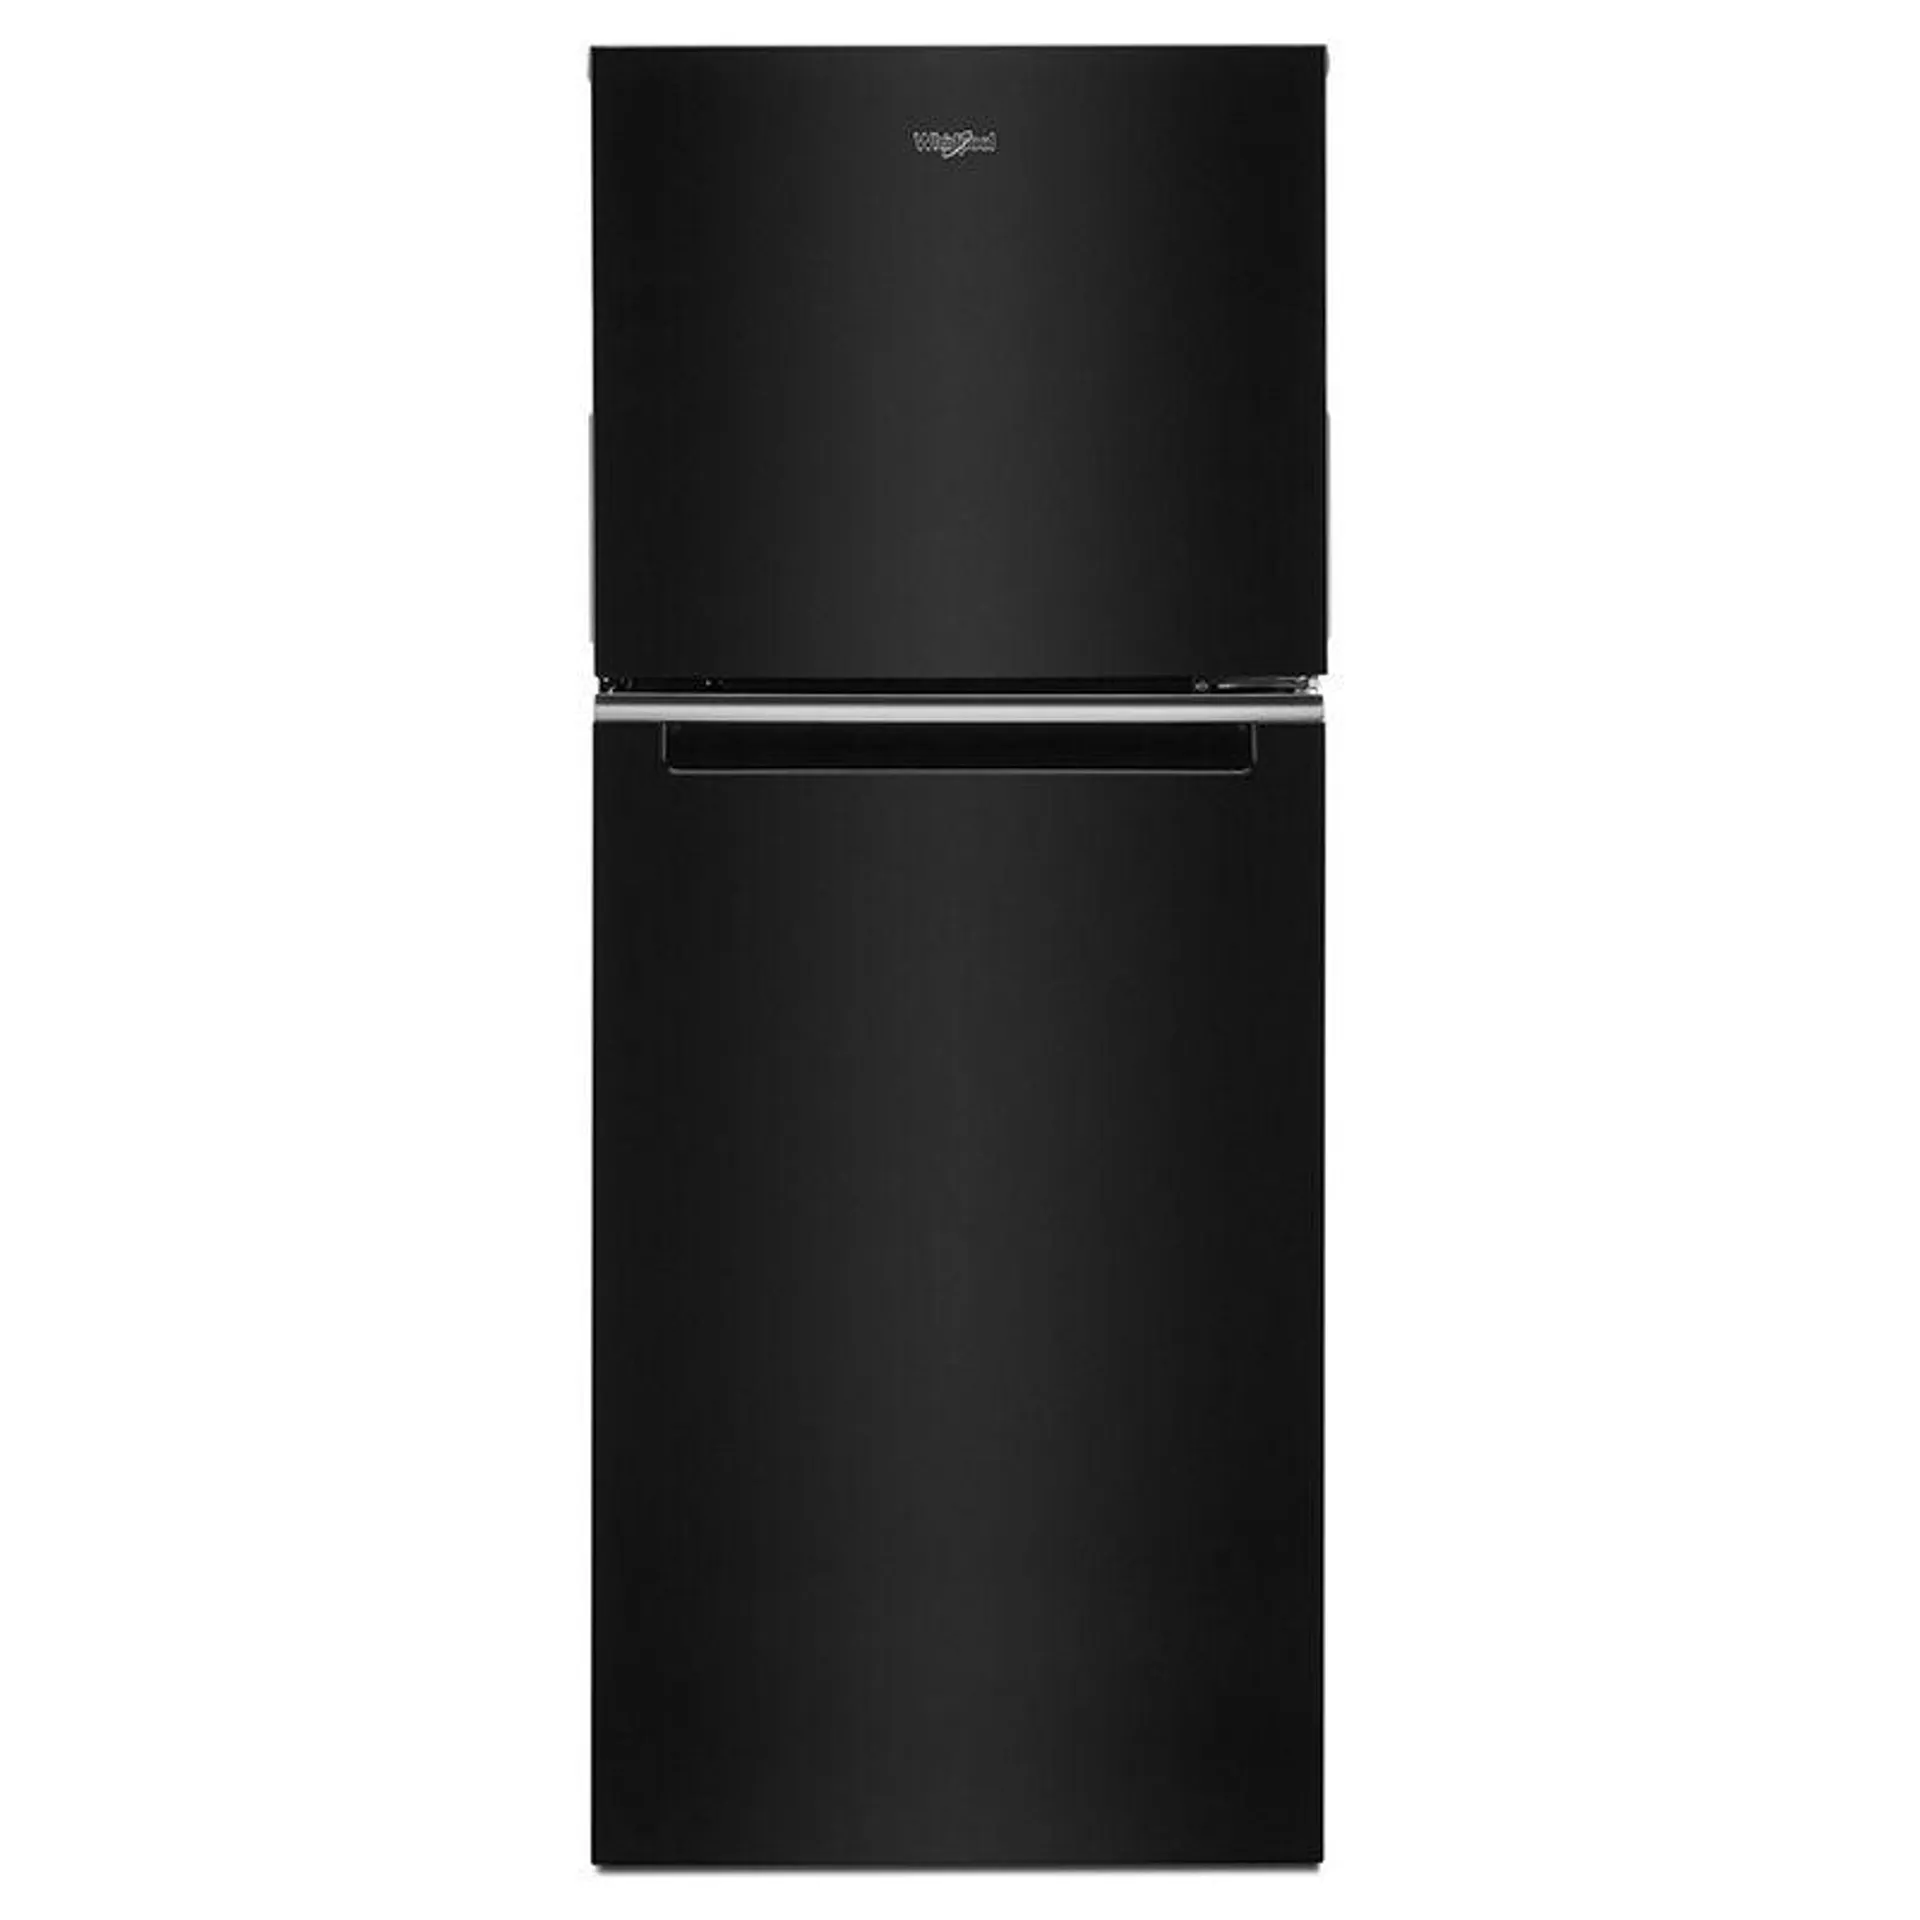 Whirlpool 24 in. 11.6 cu. ft. Counter Depth Top Freezer Refrigerator - Black